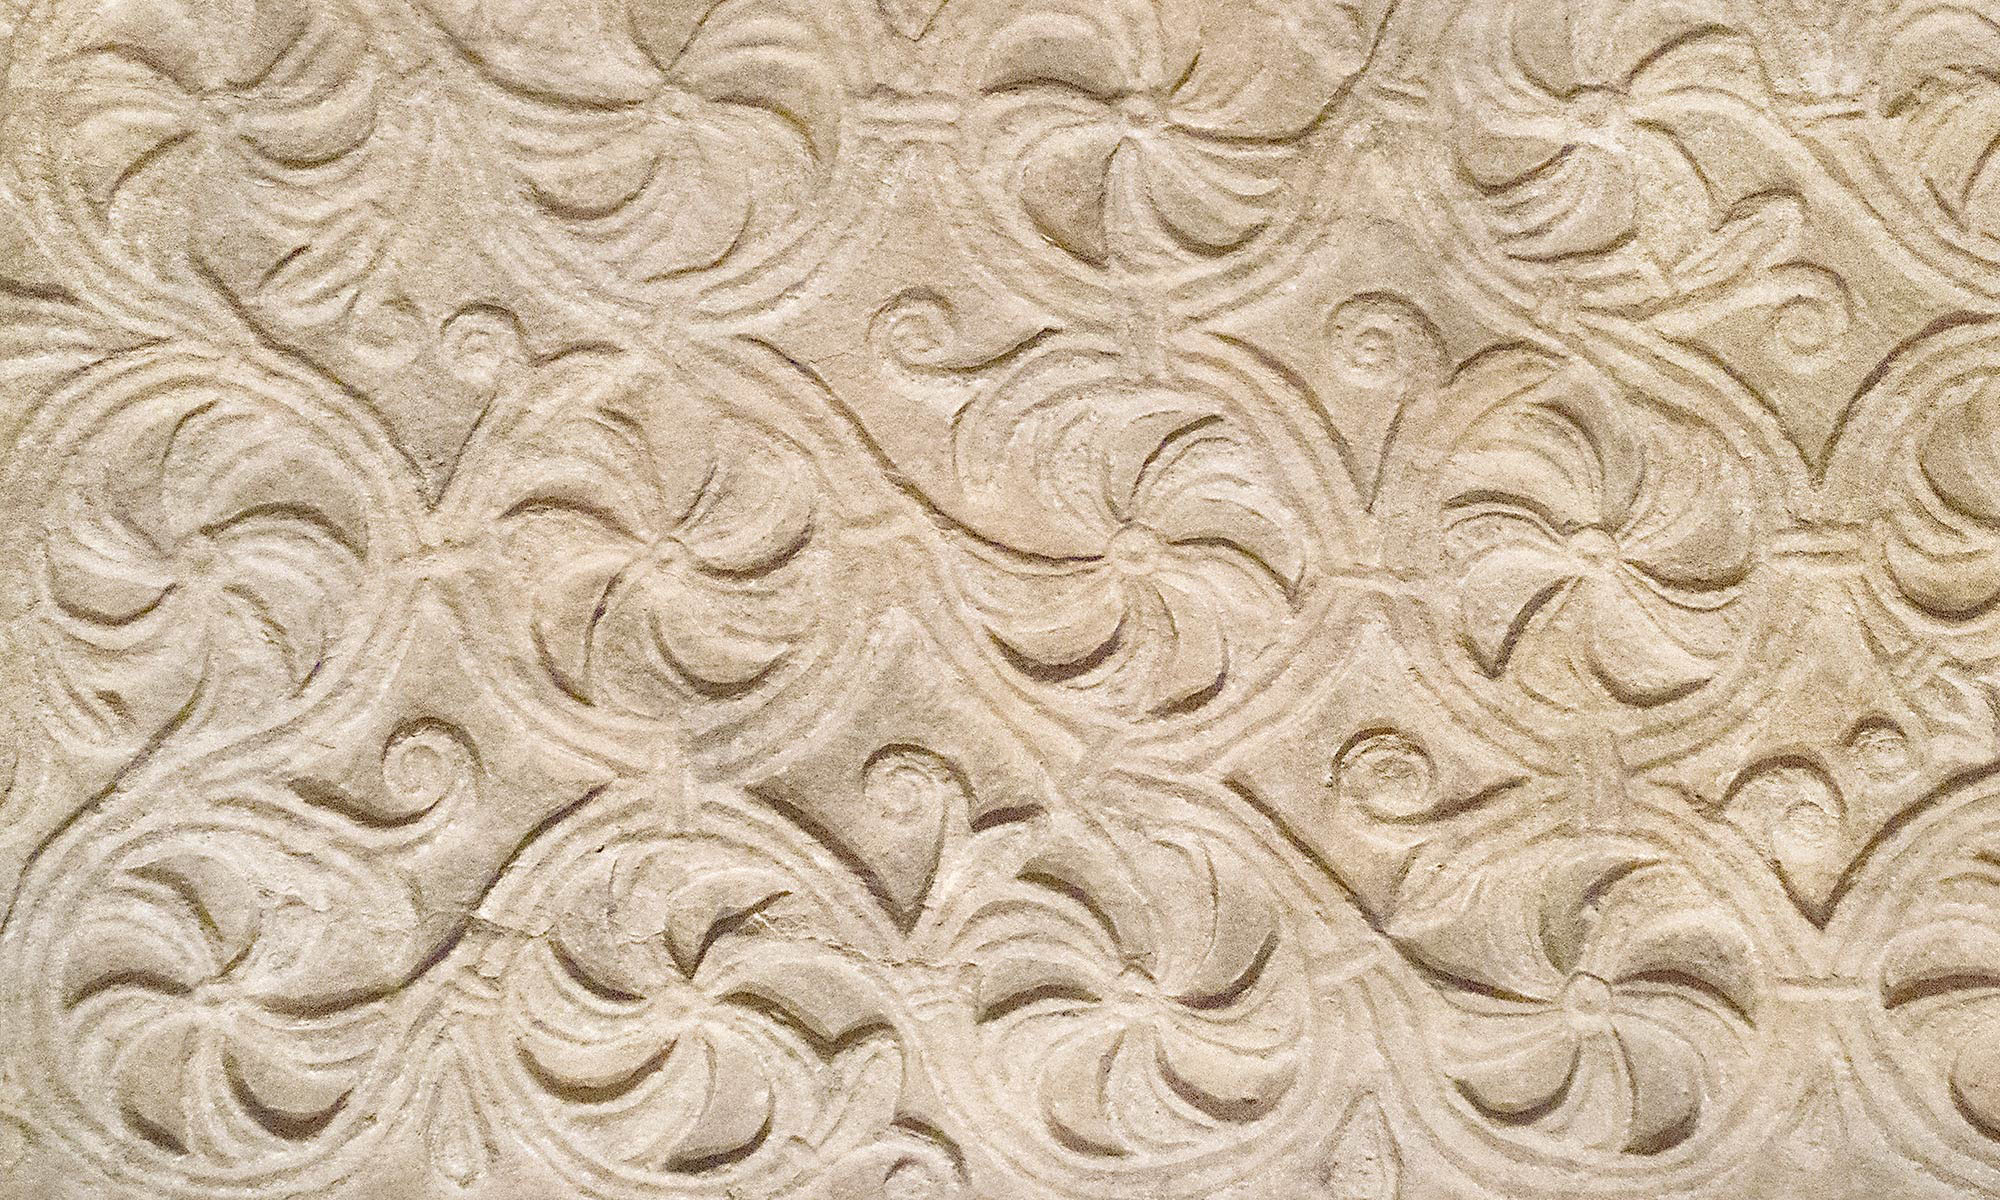 Zoë Design | Stone Wallpaper - Any stone finish on your walls